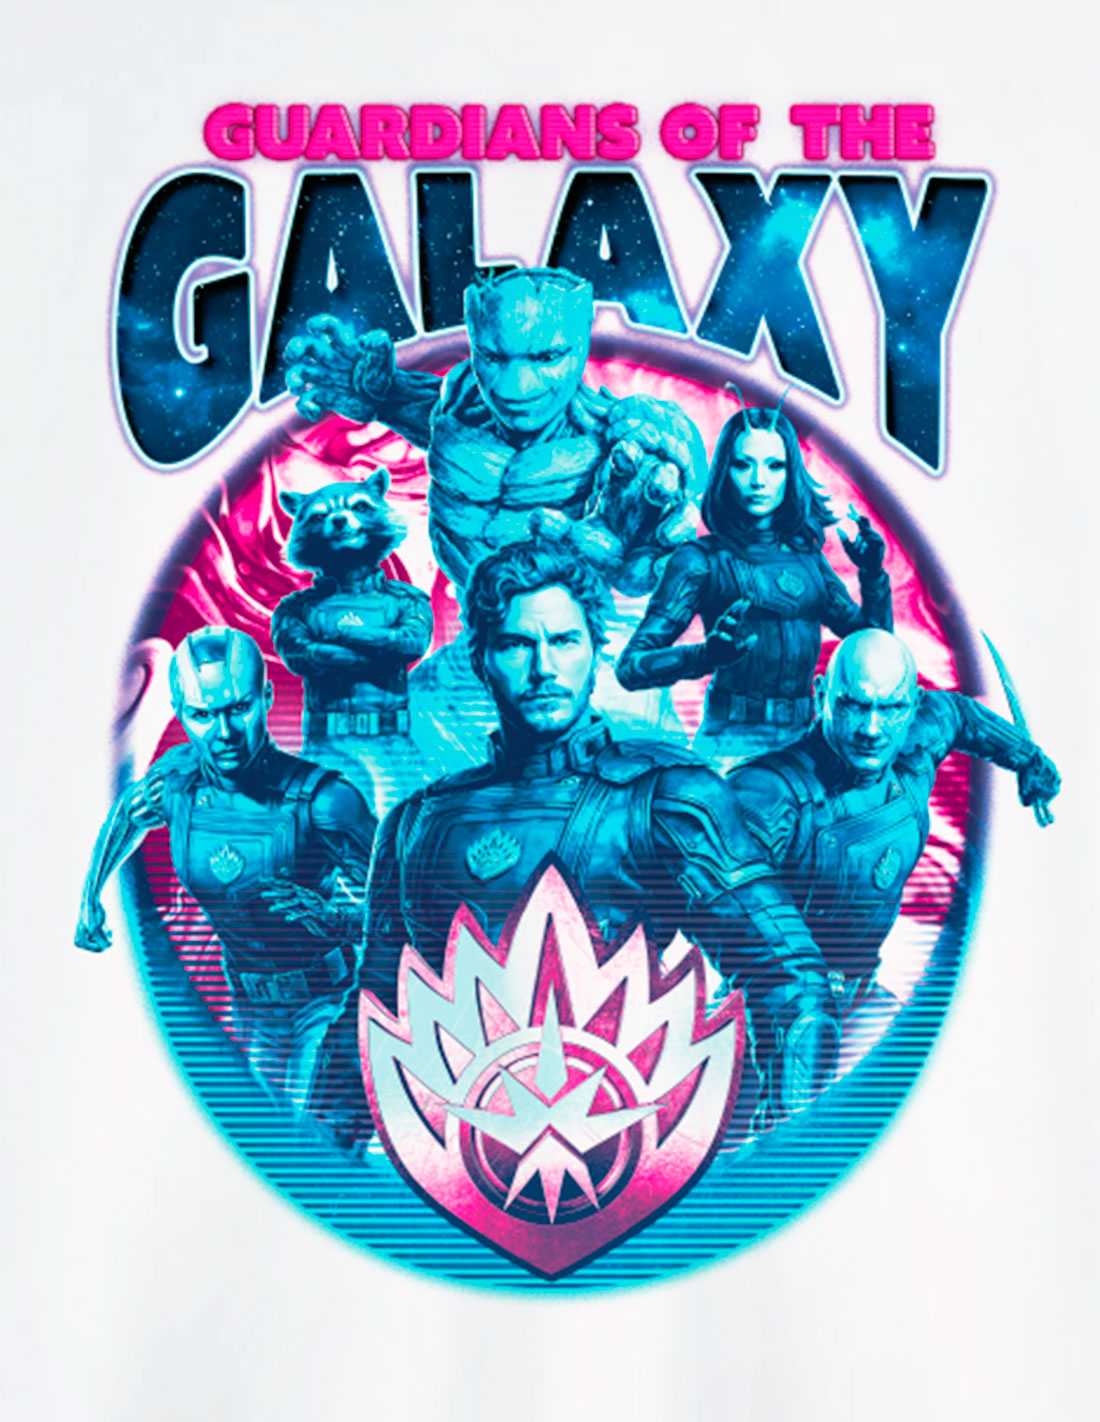 T-shirt MARVEL - Les Gardiens de la Galaxie - Eighties Guardians